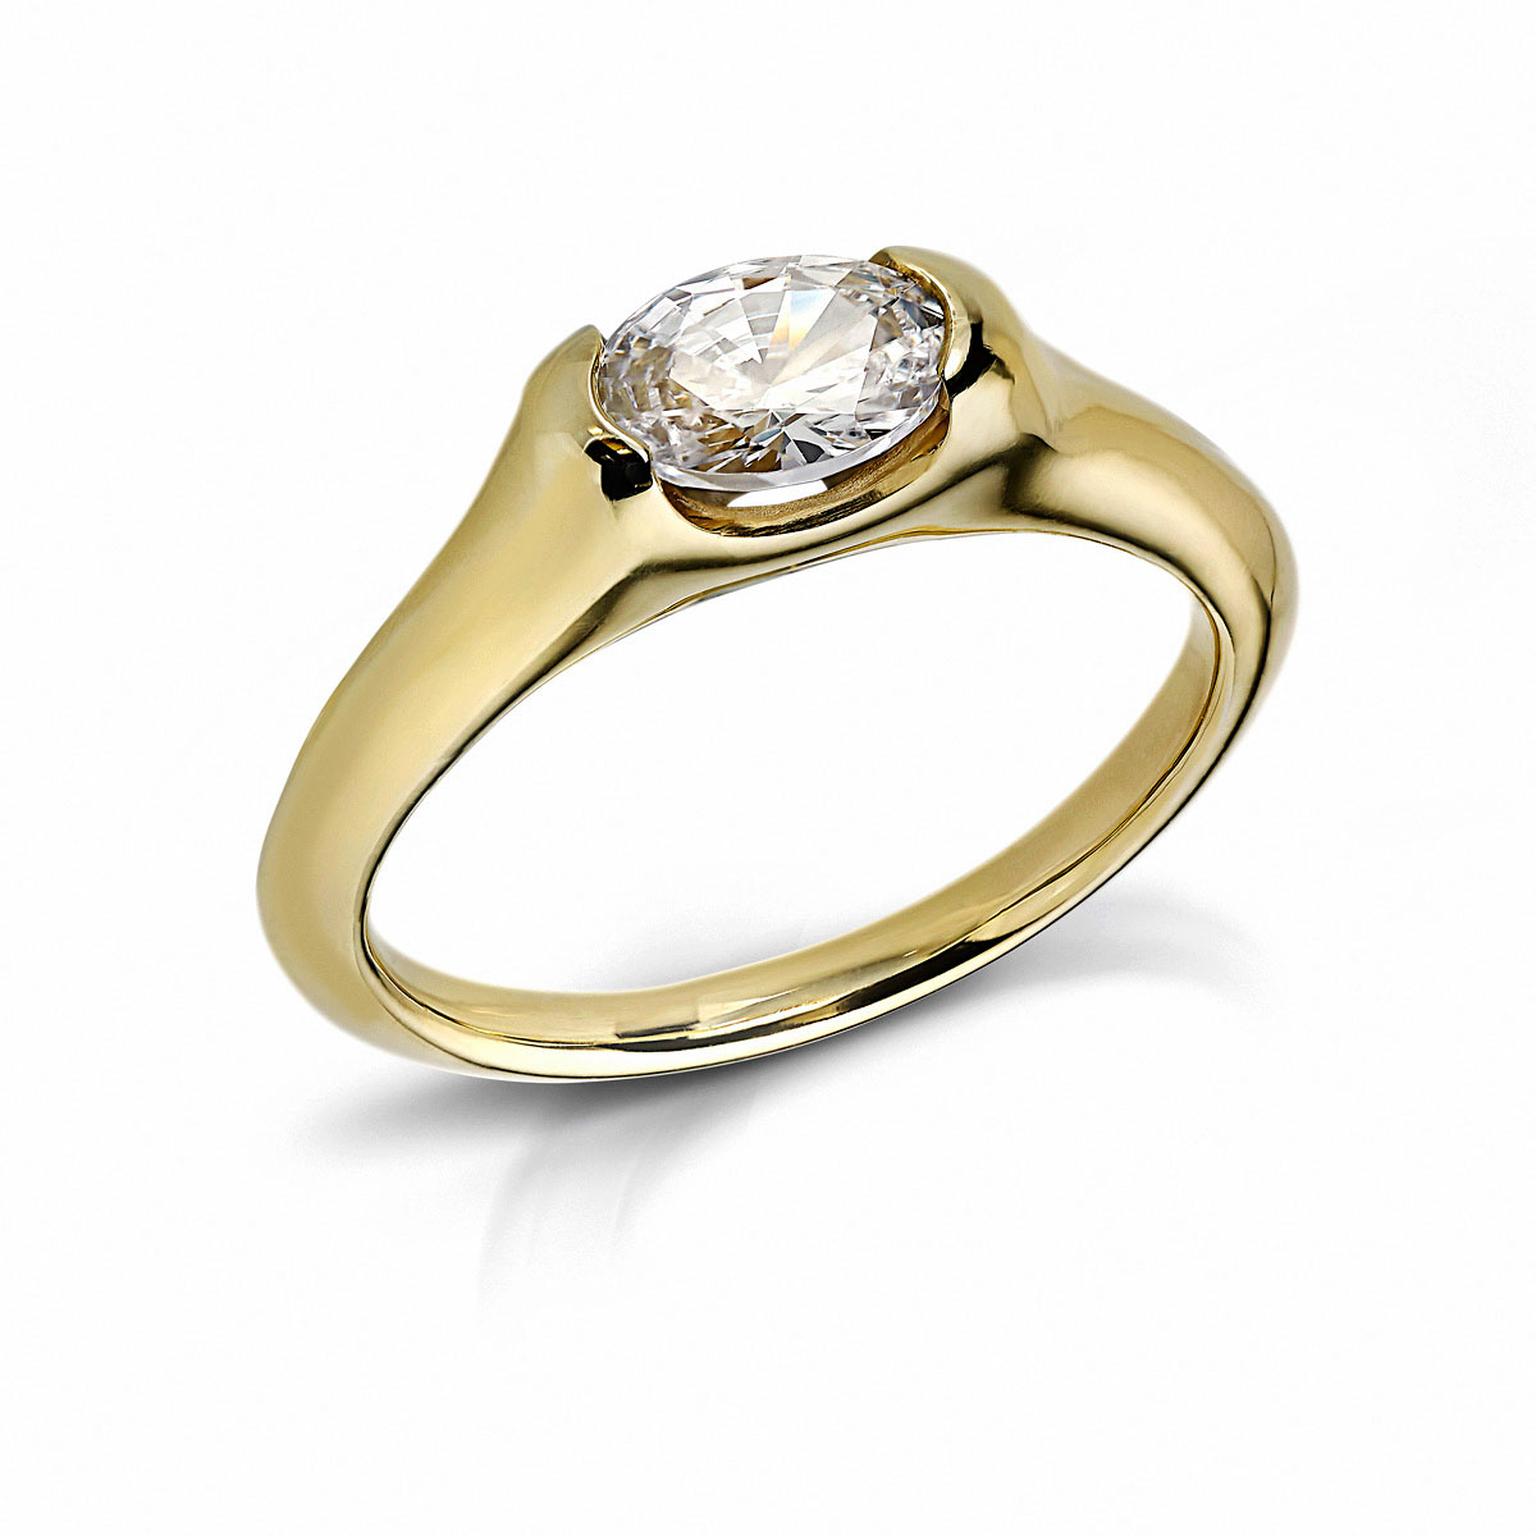 Arctic Circle Diamonds diamond engagement ring